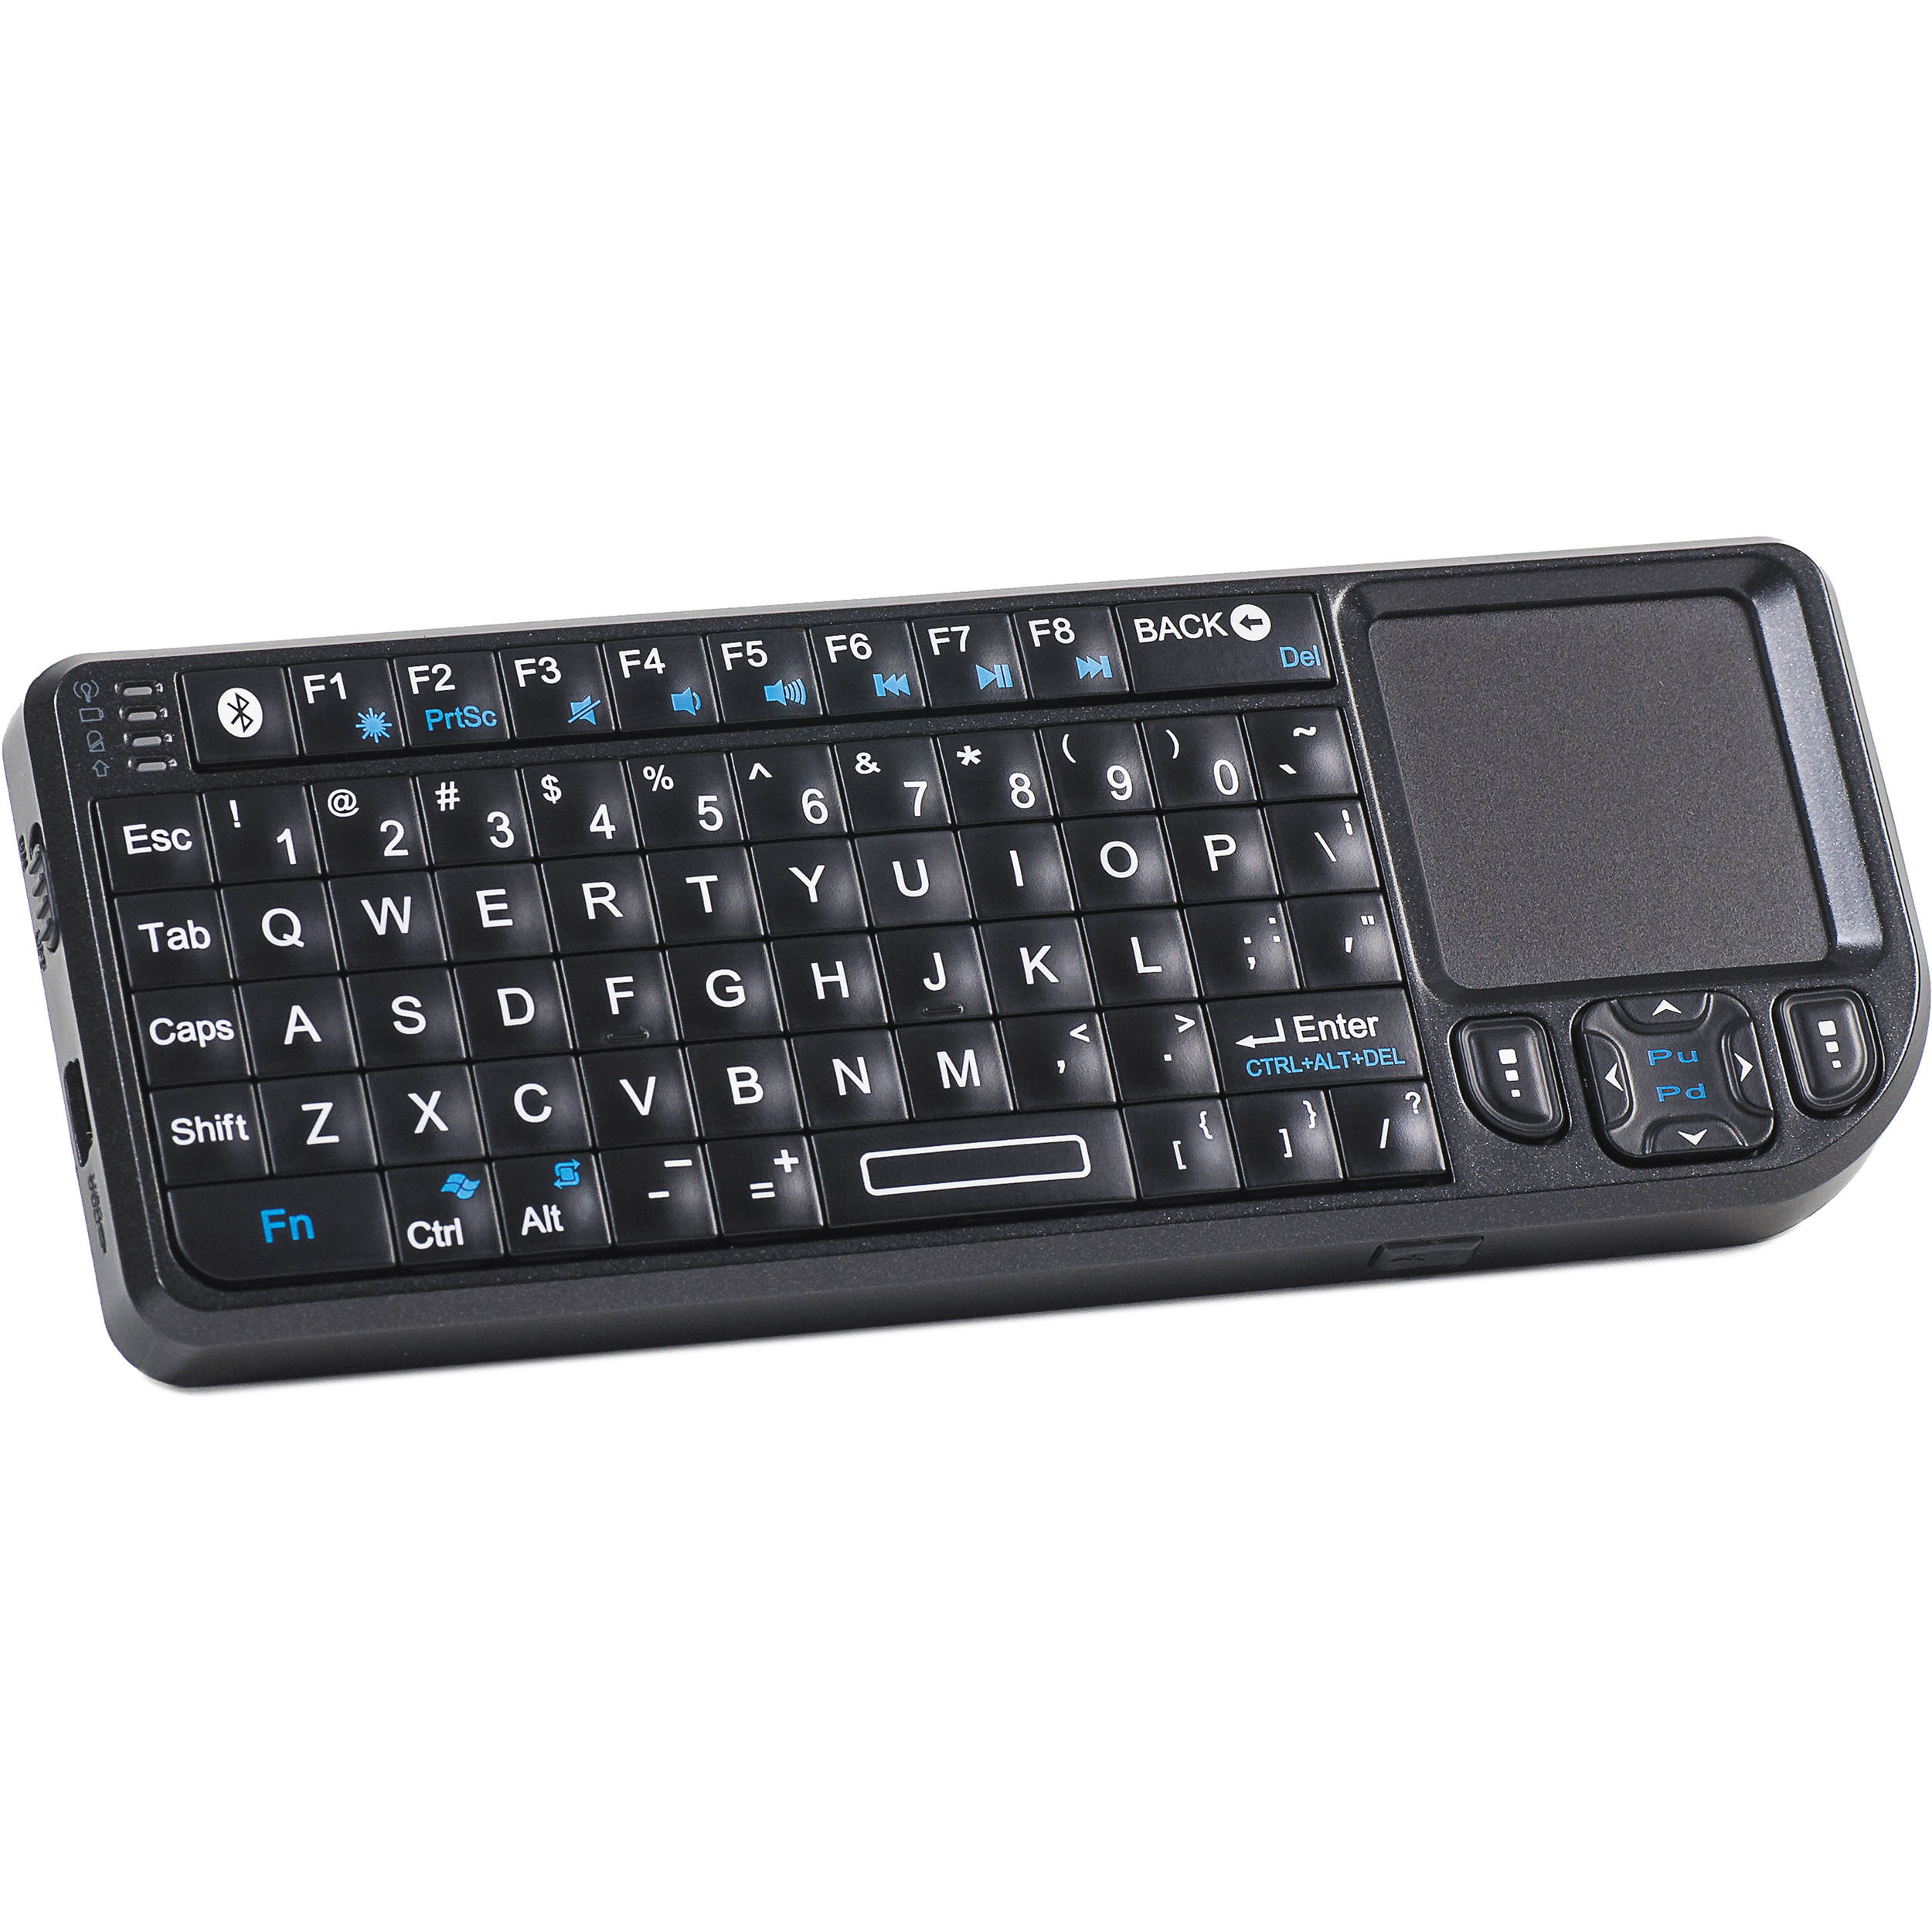 Autocueqtv Bluetooth Keyboard Controller Con Ipad Bluetooth B H